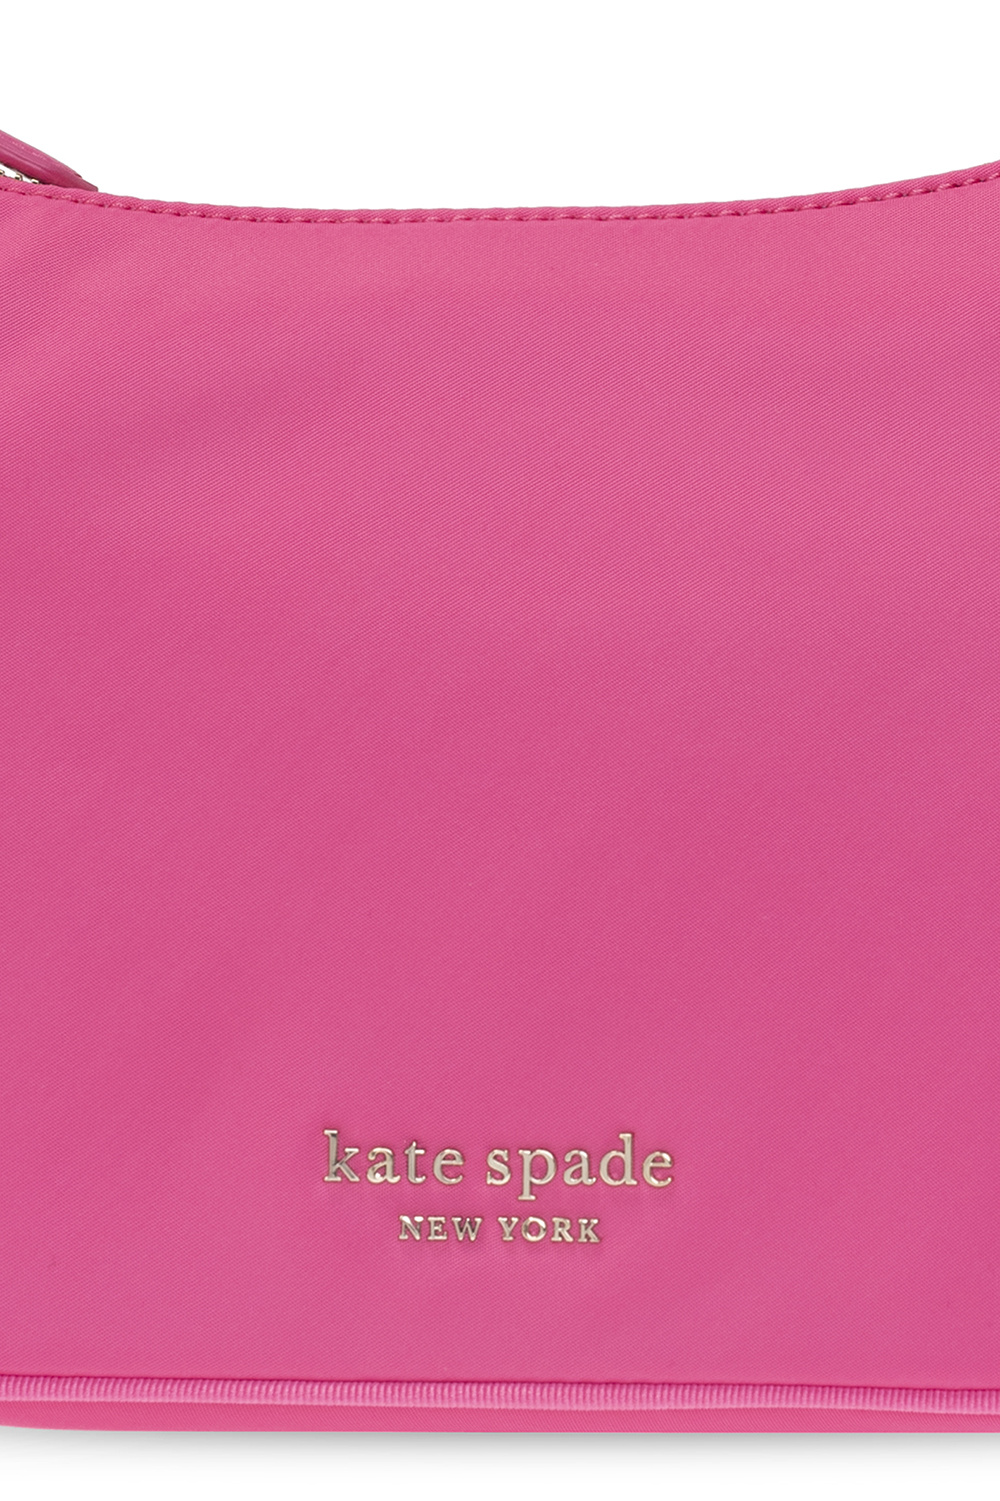 Kate Spade Fruit Crossbody Bags for Women